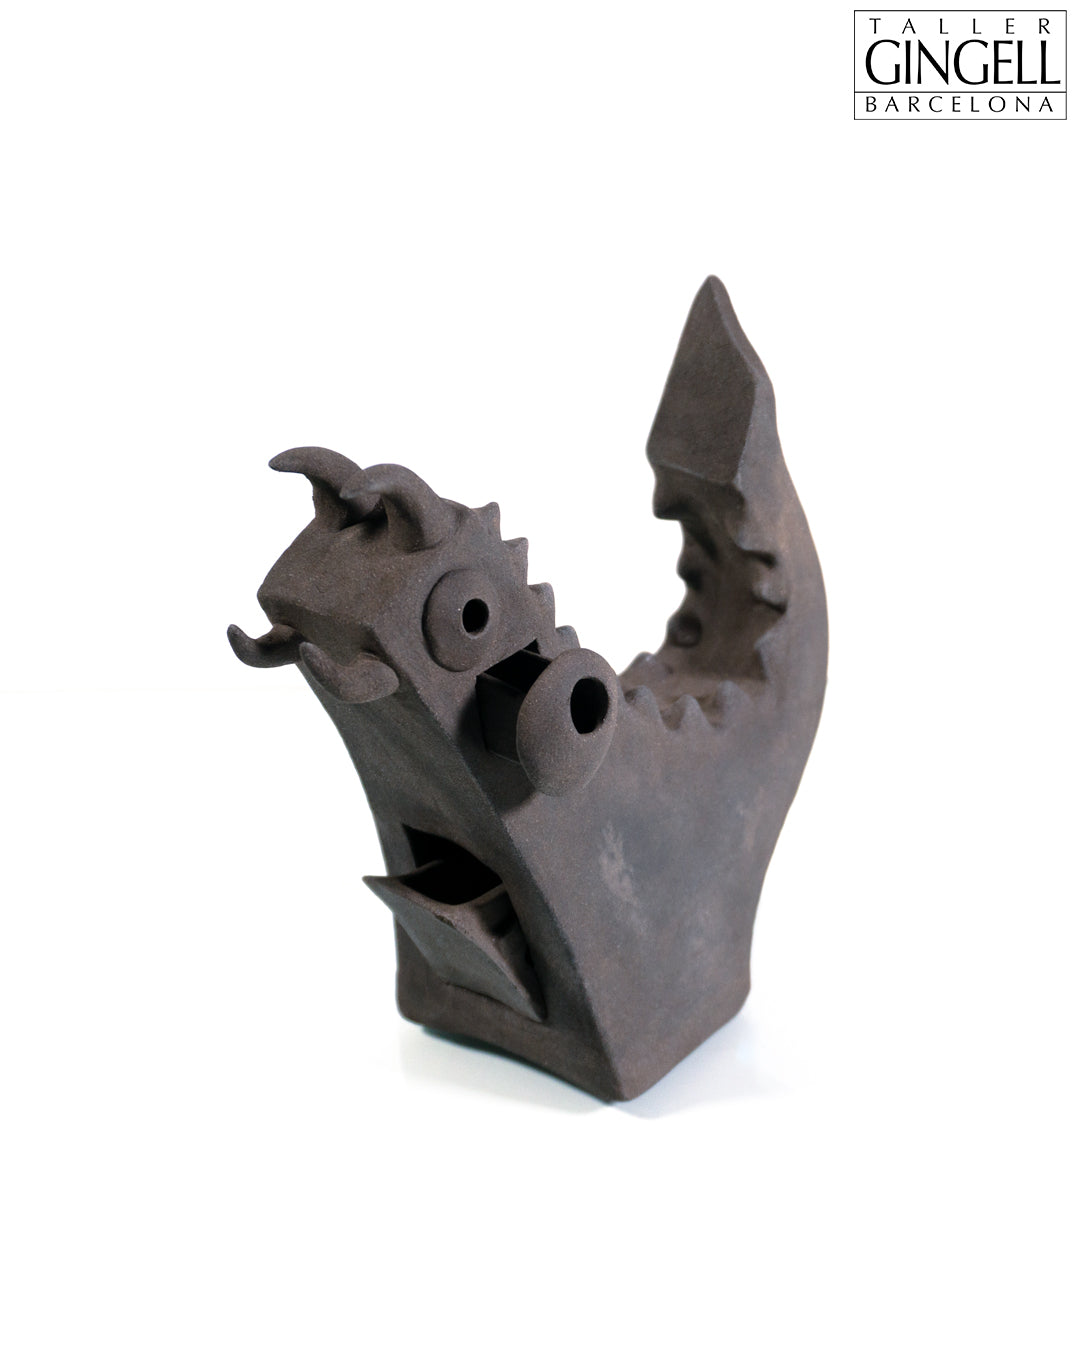 Ceramic sculpture in black stoneware from Catalonia